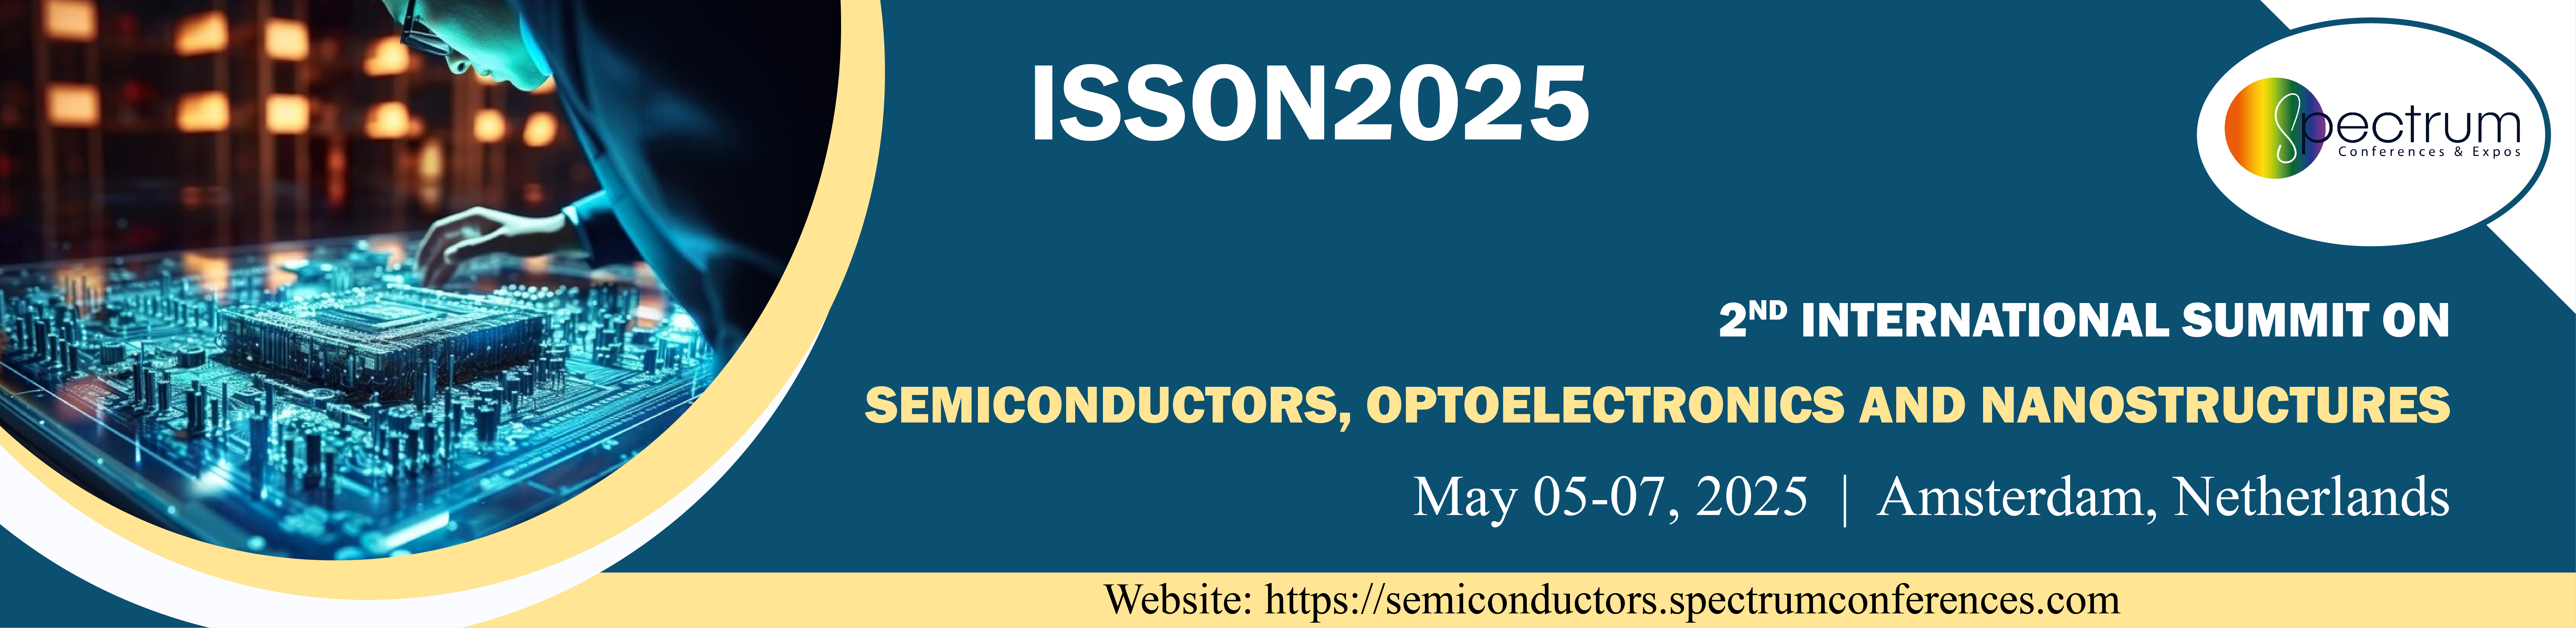 2nd International Summit on Semiconductors, Optoelectronics and